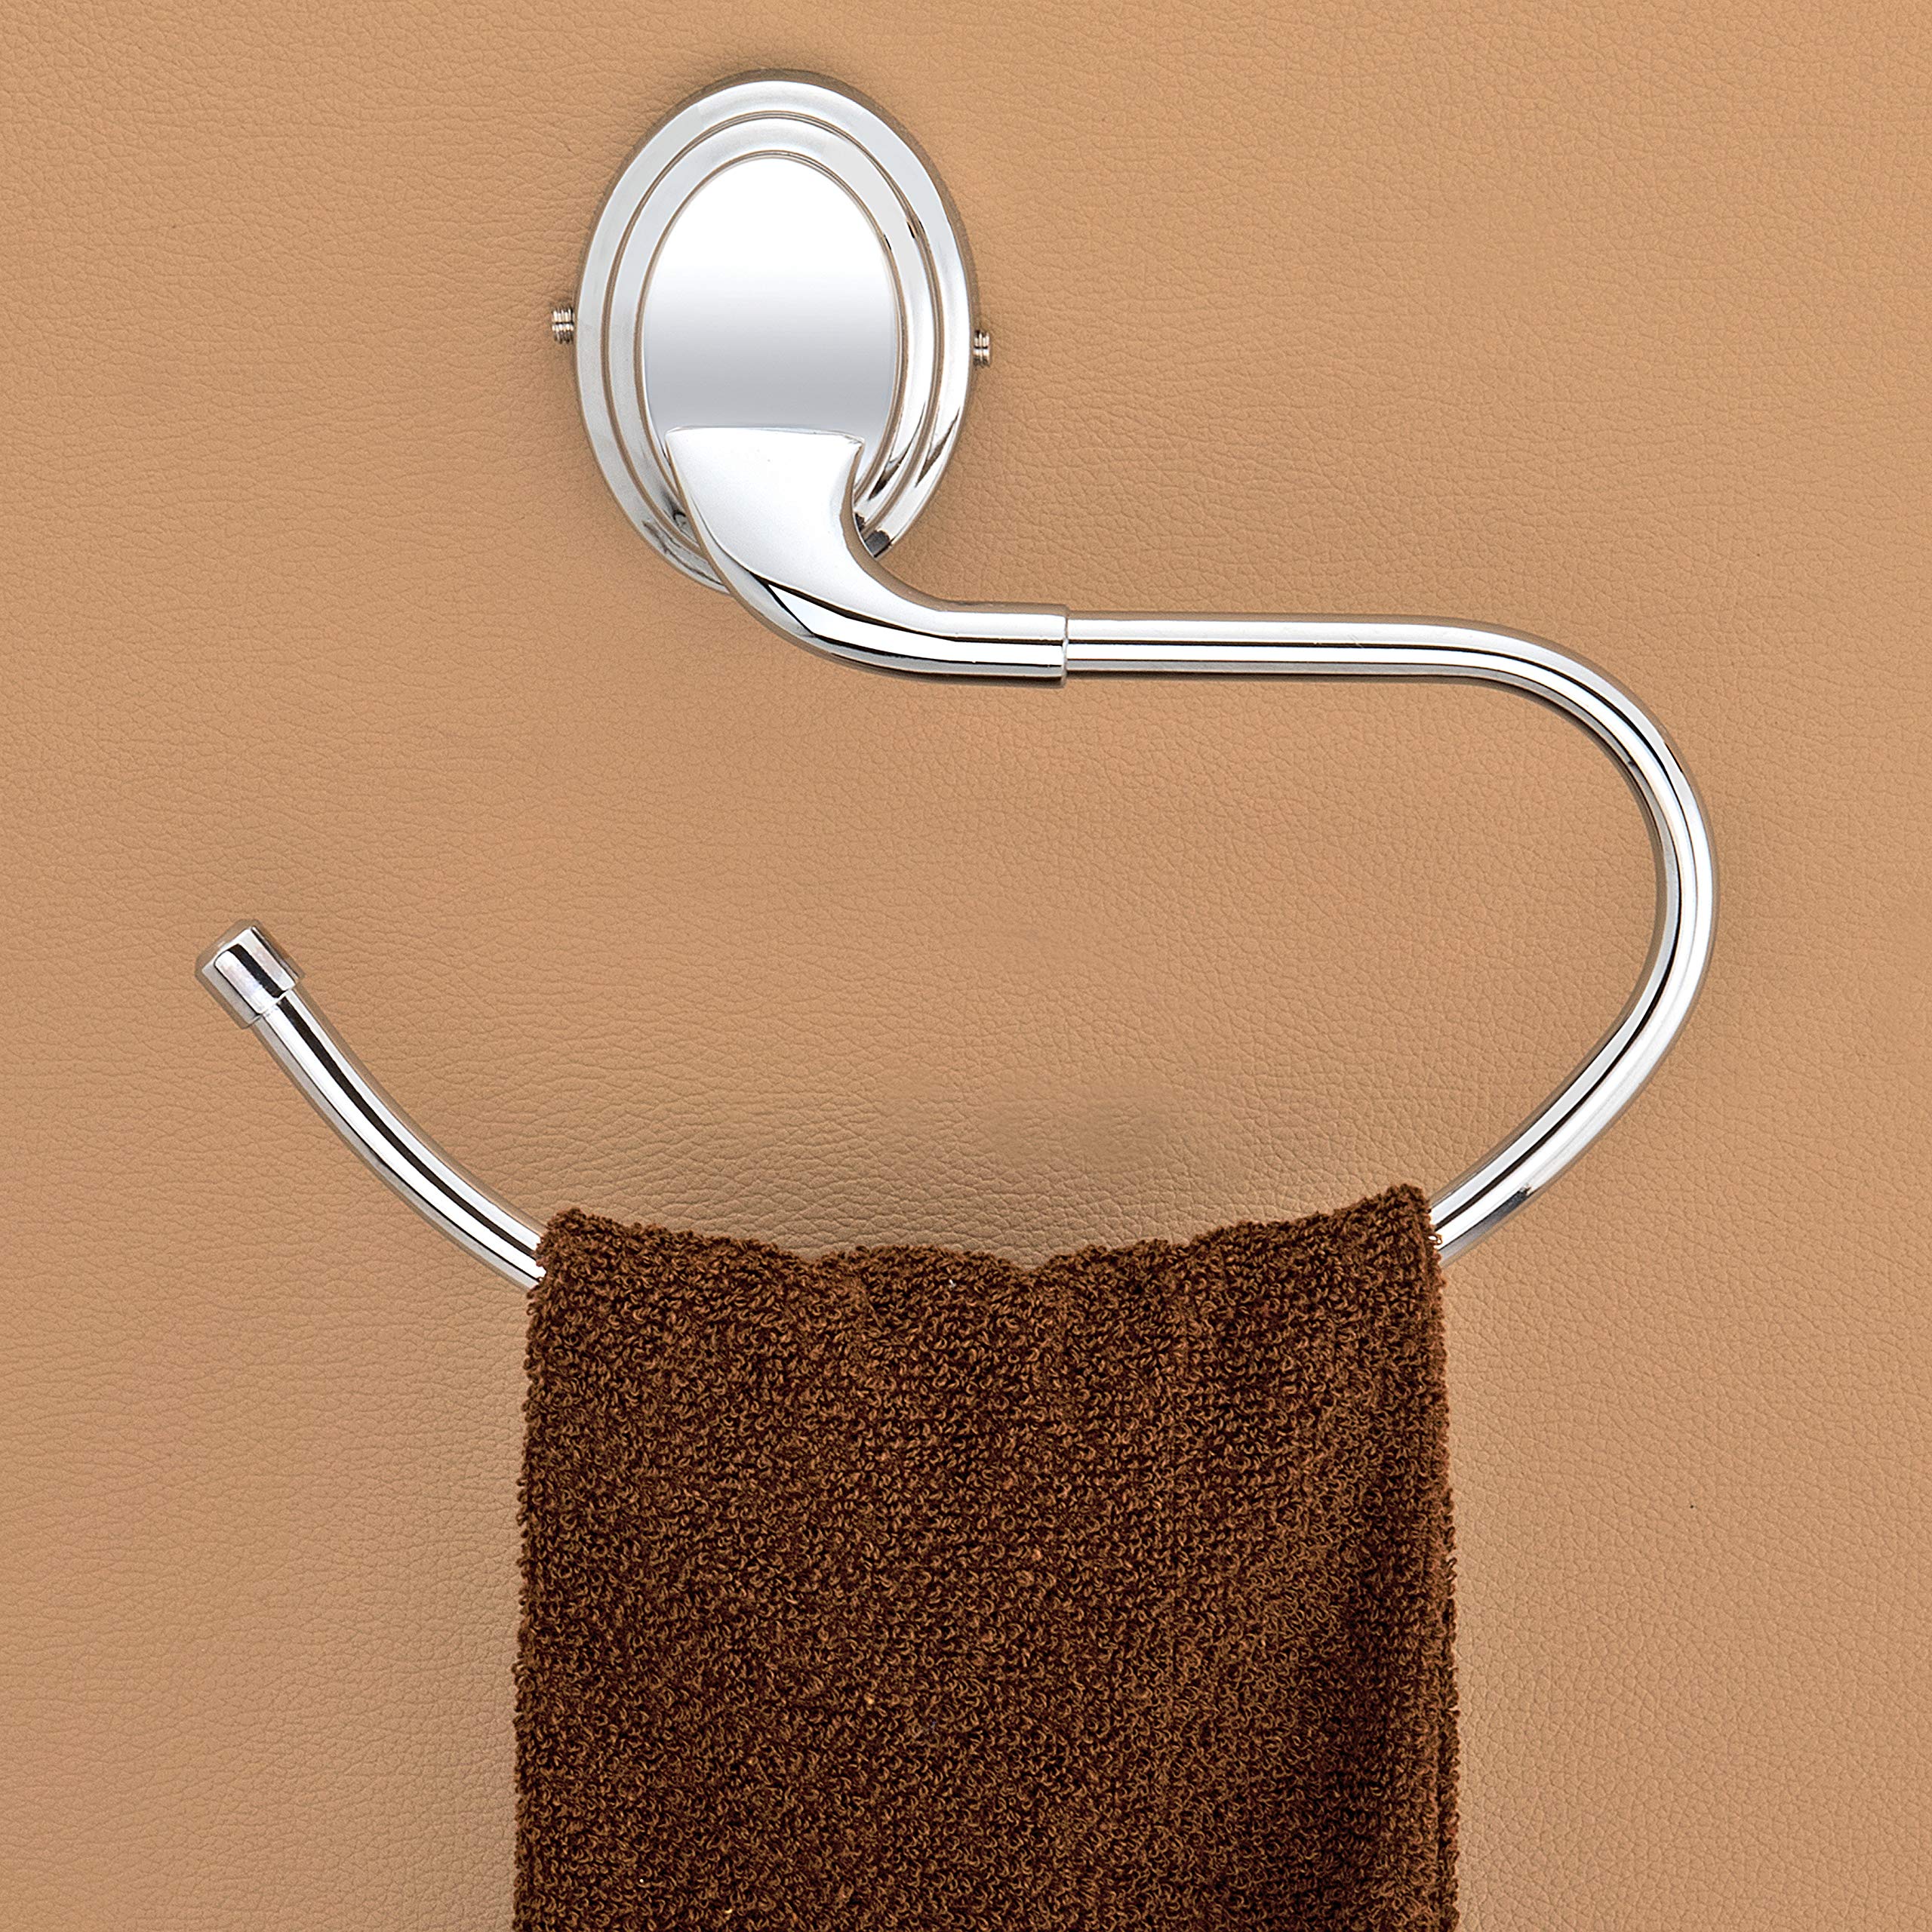 Plantex Stainless Steel 304 Grade Cubic Napkin Ring/Towel Ring/Napkin Holder/Towel Hanger/Bathroom Accessories(Chrome) - Pack of 3